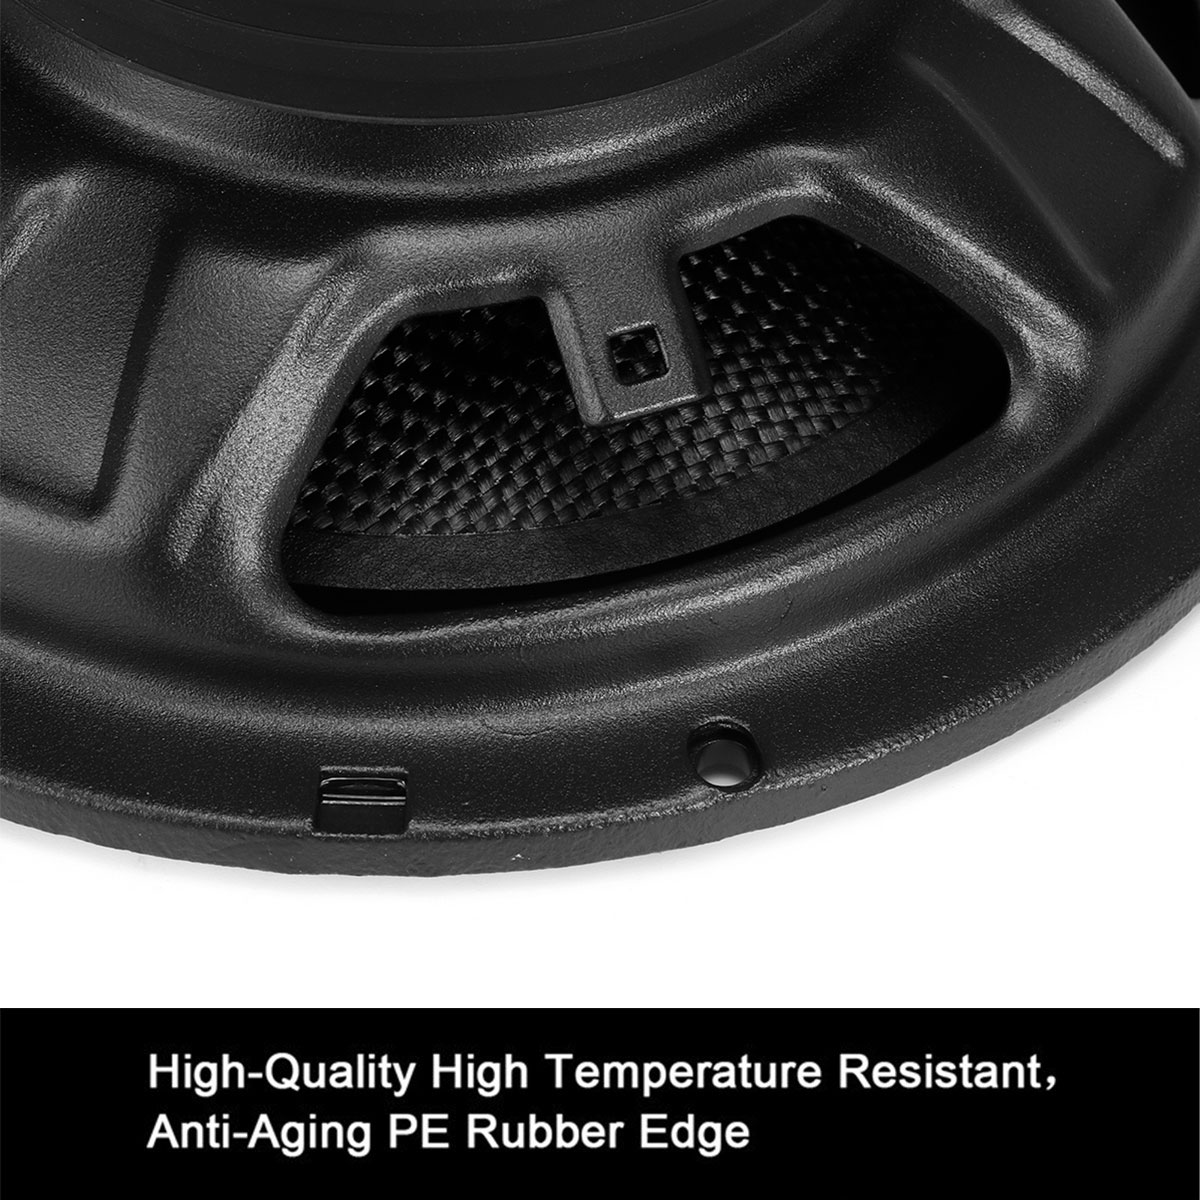 Andeman K-60B 2PCS 6.5 Inch 12V 150W Car Speaker Vehicle Auto Music Stereo Full Range Frequency Speakers Non-destructive